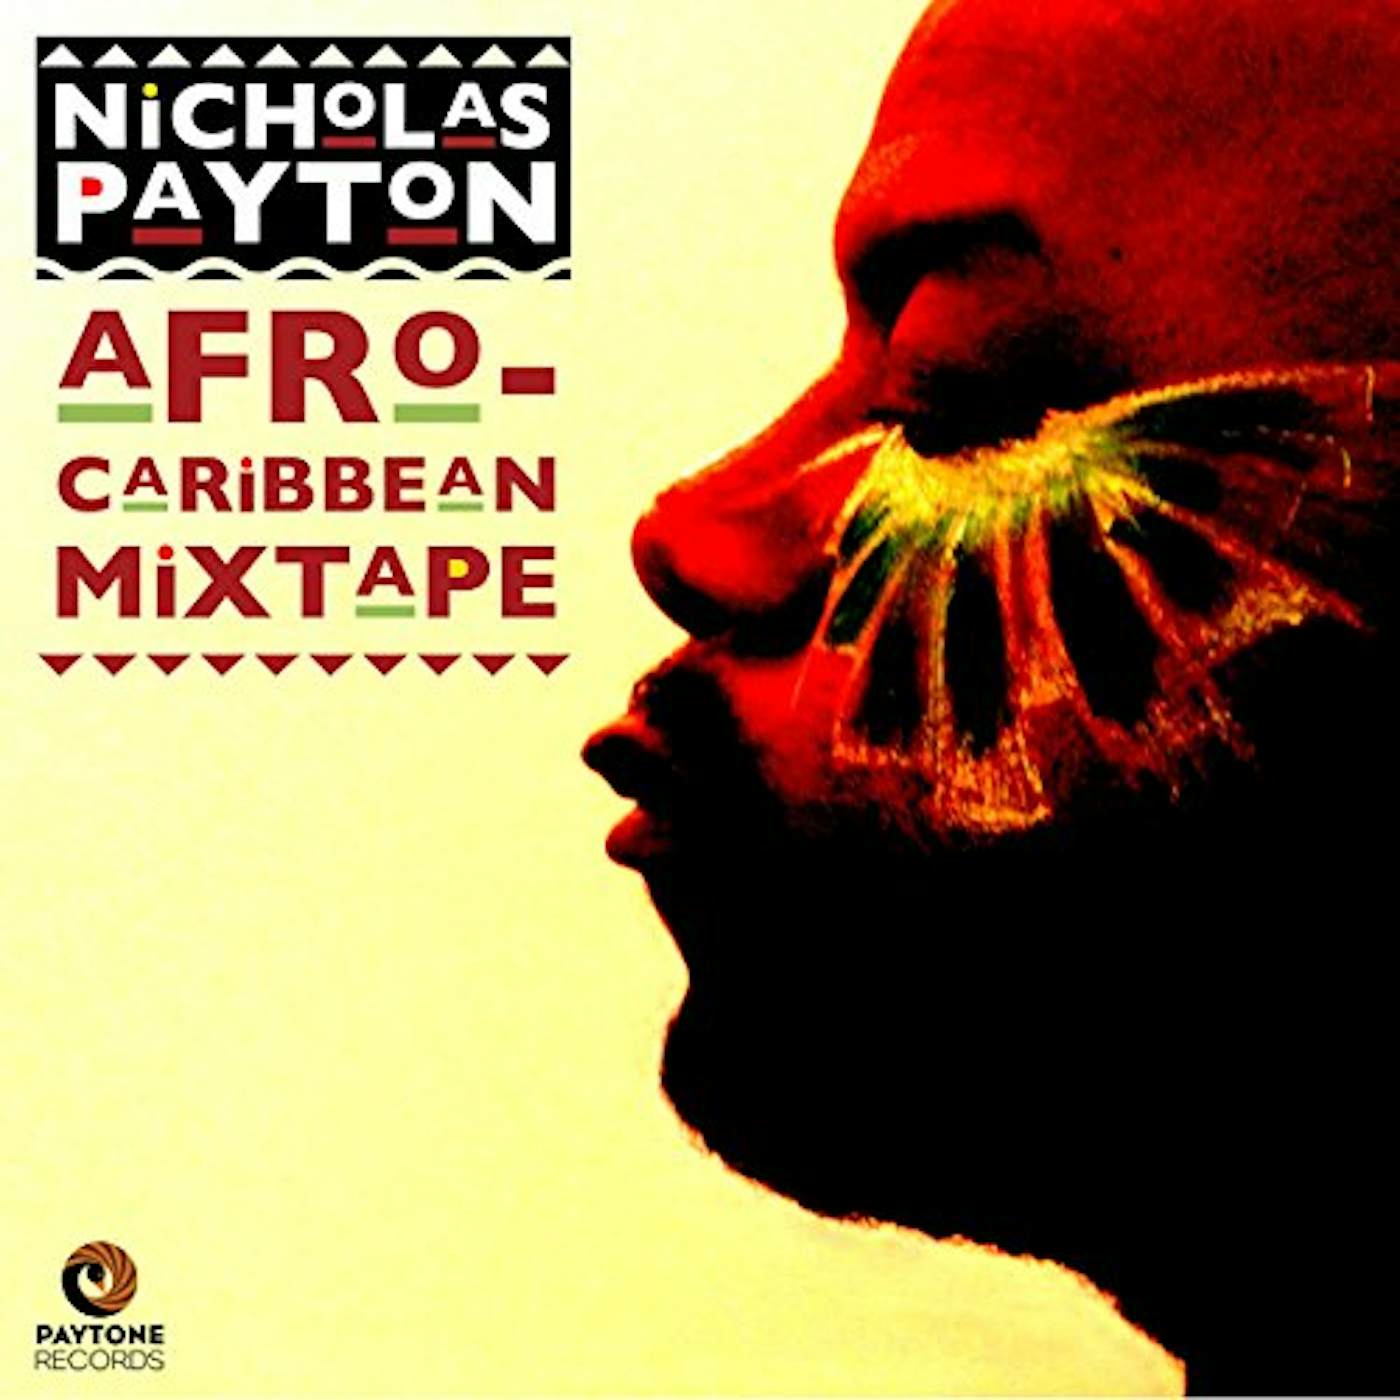 Nicholas Payton AFRO-CARIBBEAN MIXTAPE CD